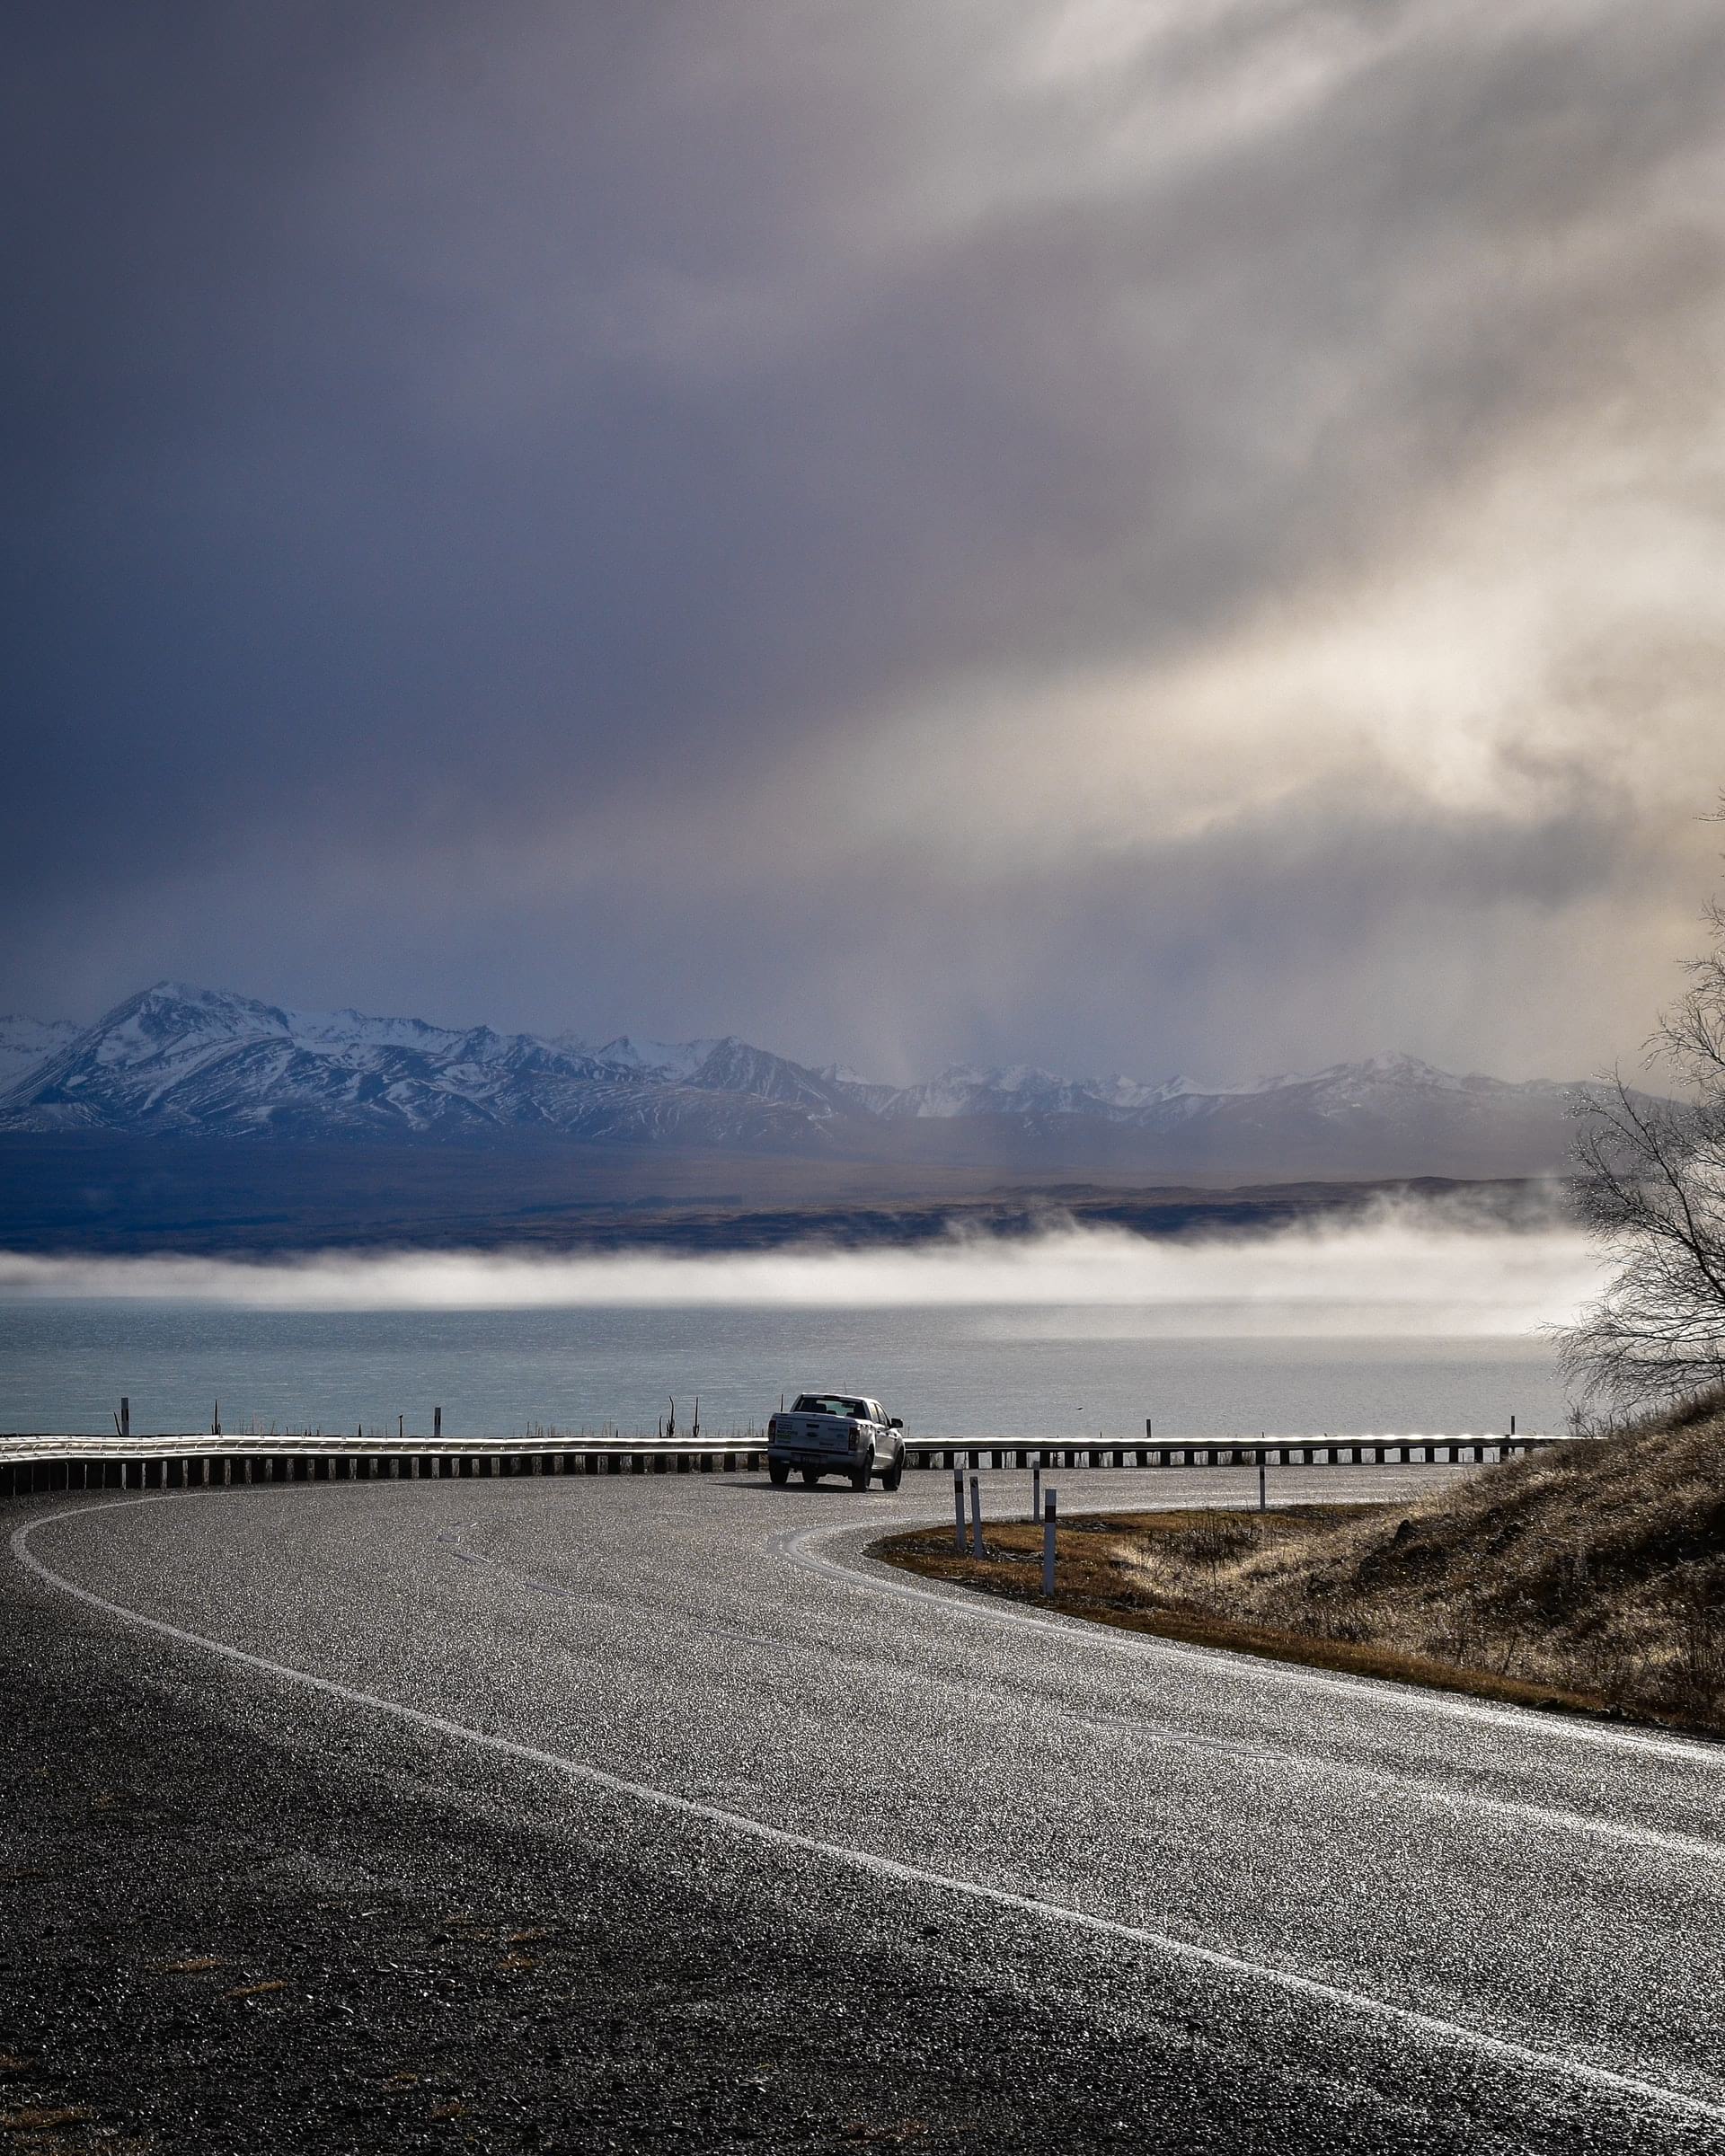 Truck on a driving holiday in New Zealand's South Island near Lake Tekapo